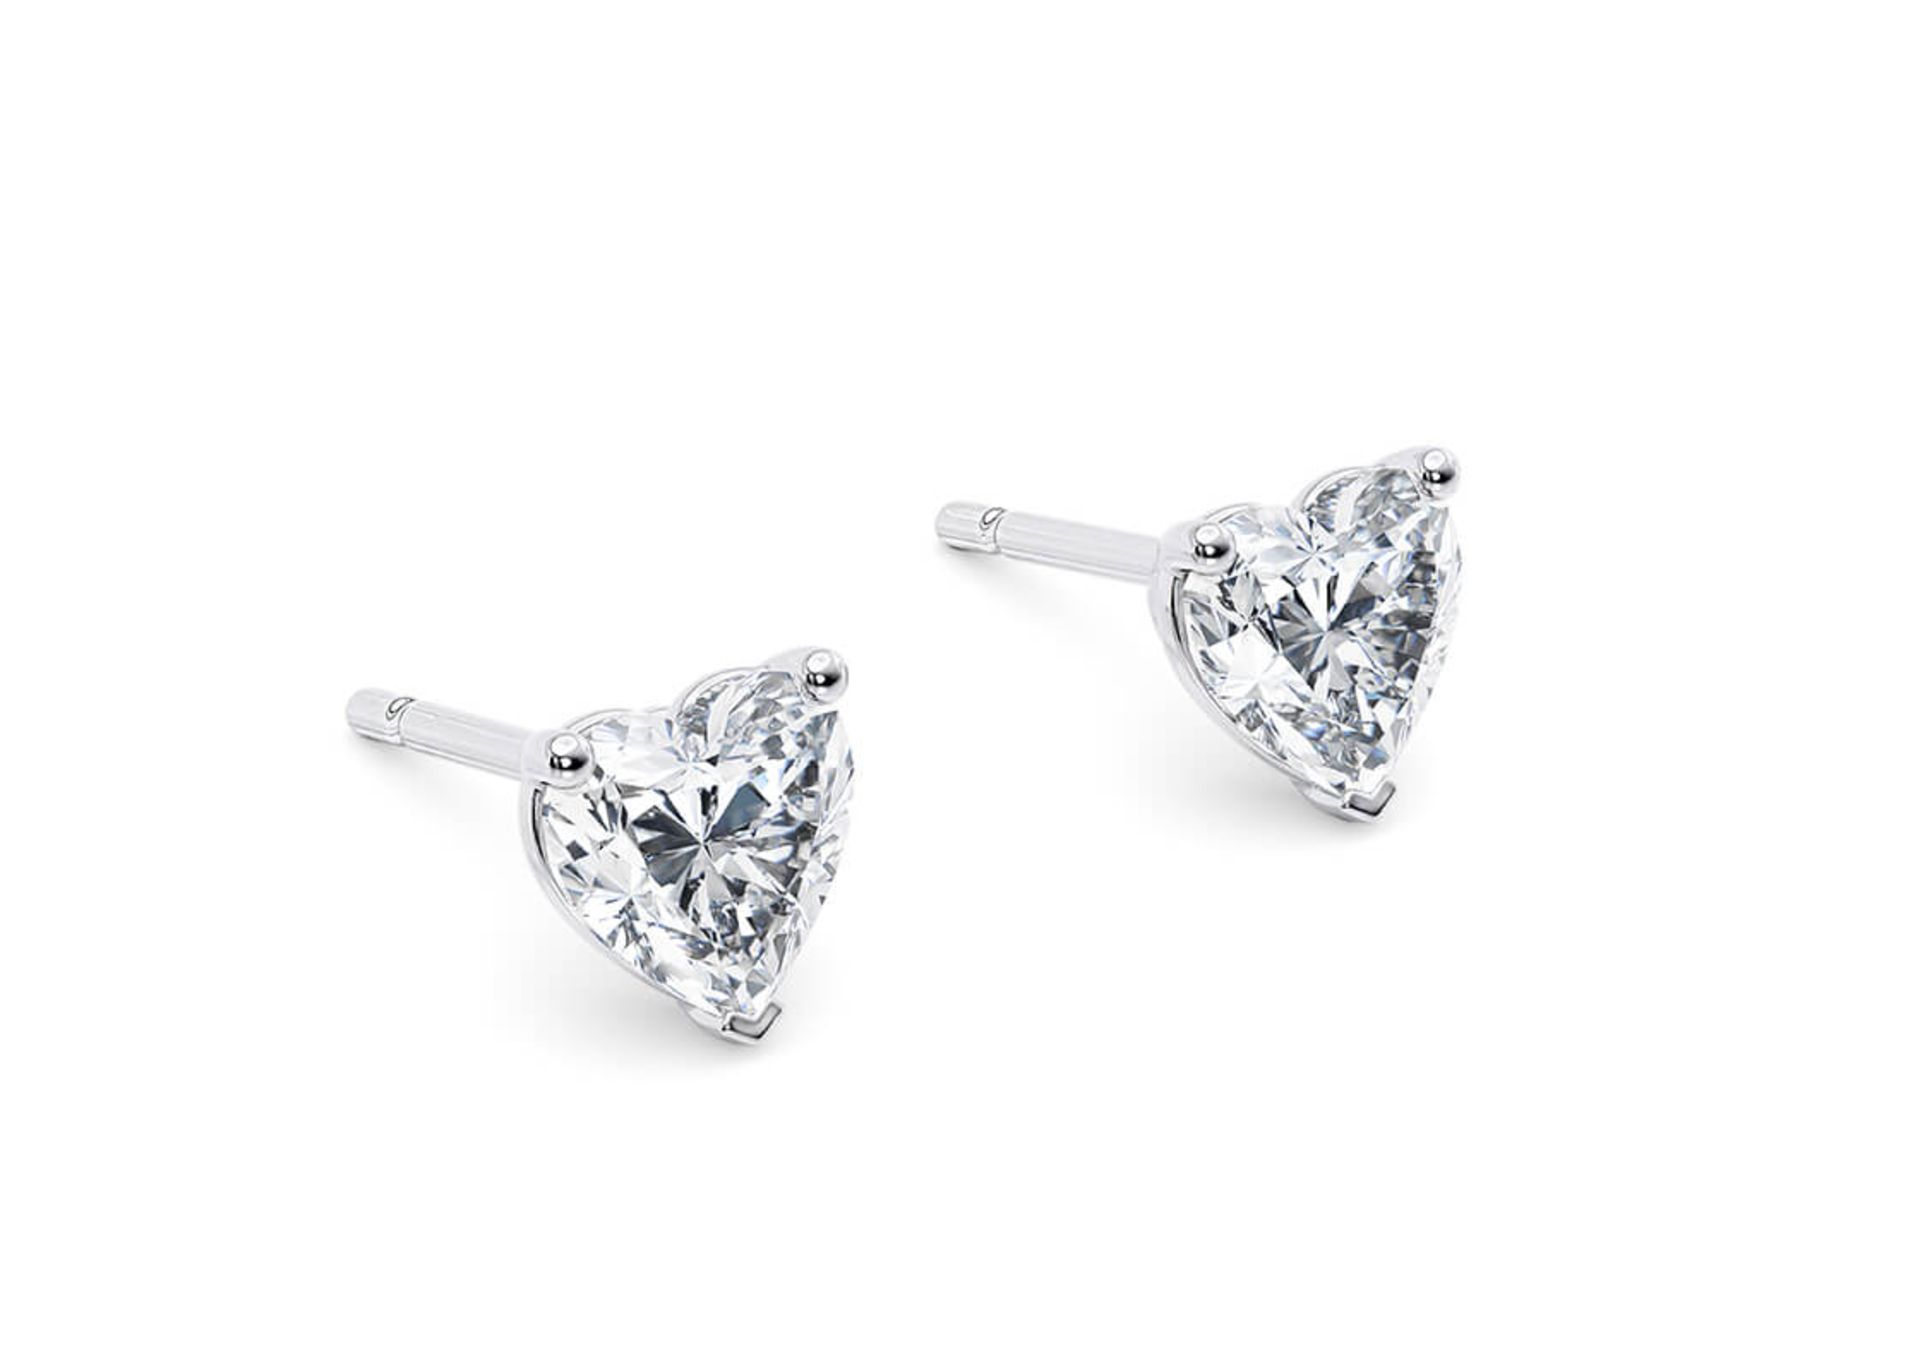 Heart Cut 2.00 Carat Diamond Earrings Set in 18kt White Gold - D Colour VS Clarity - IGI - Image 2 of 3